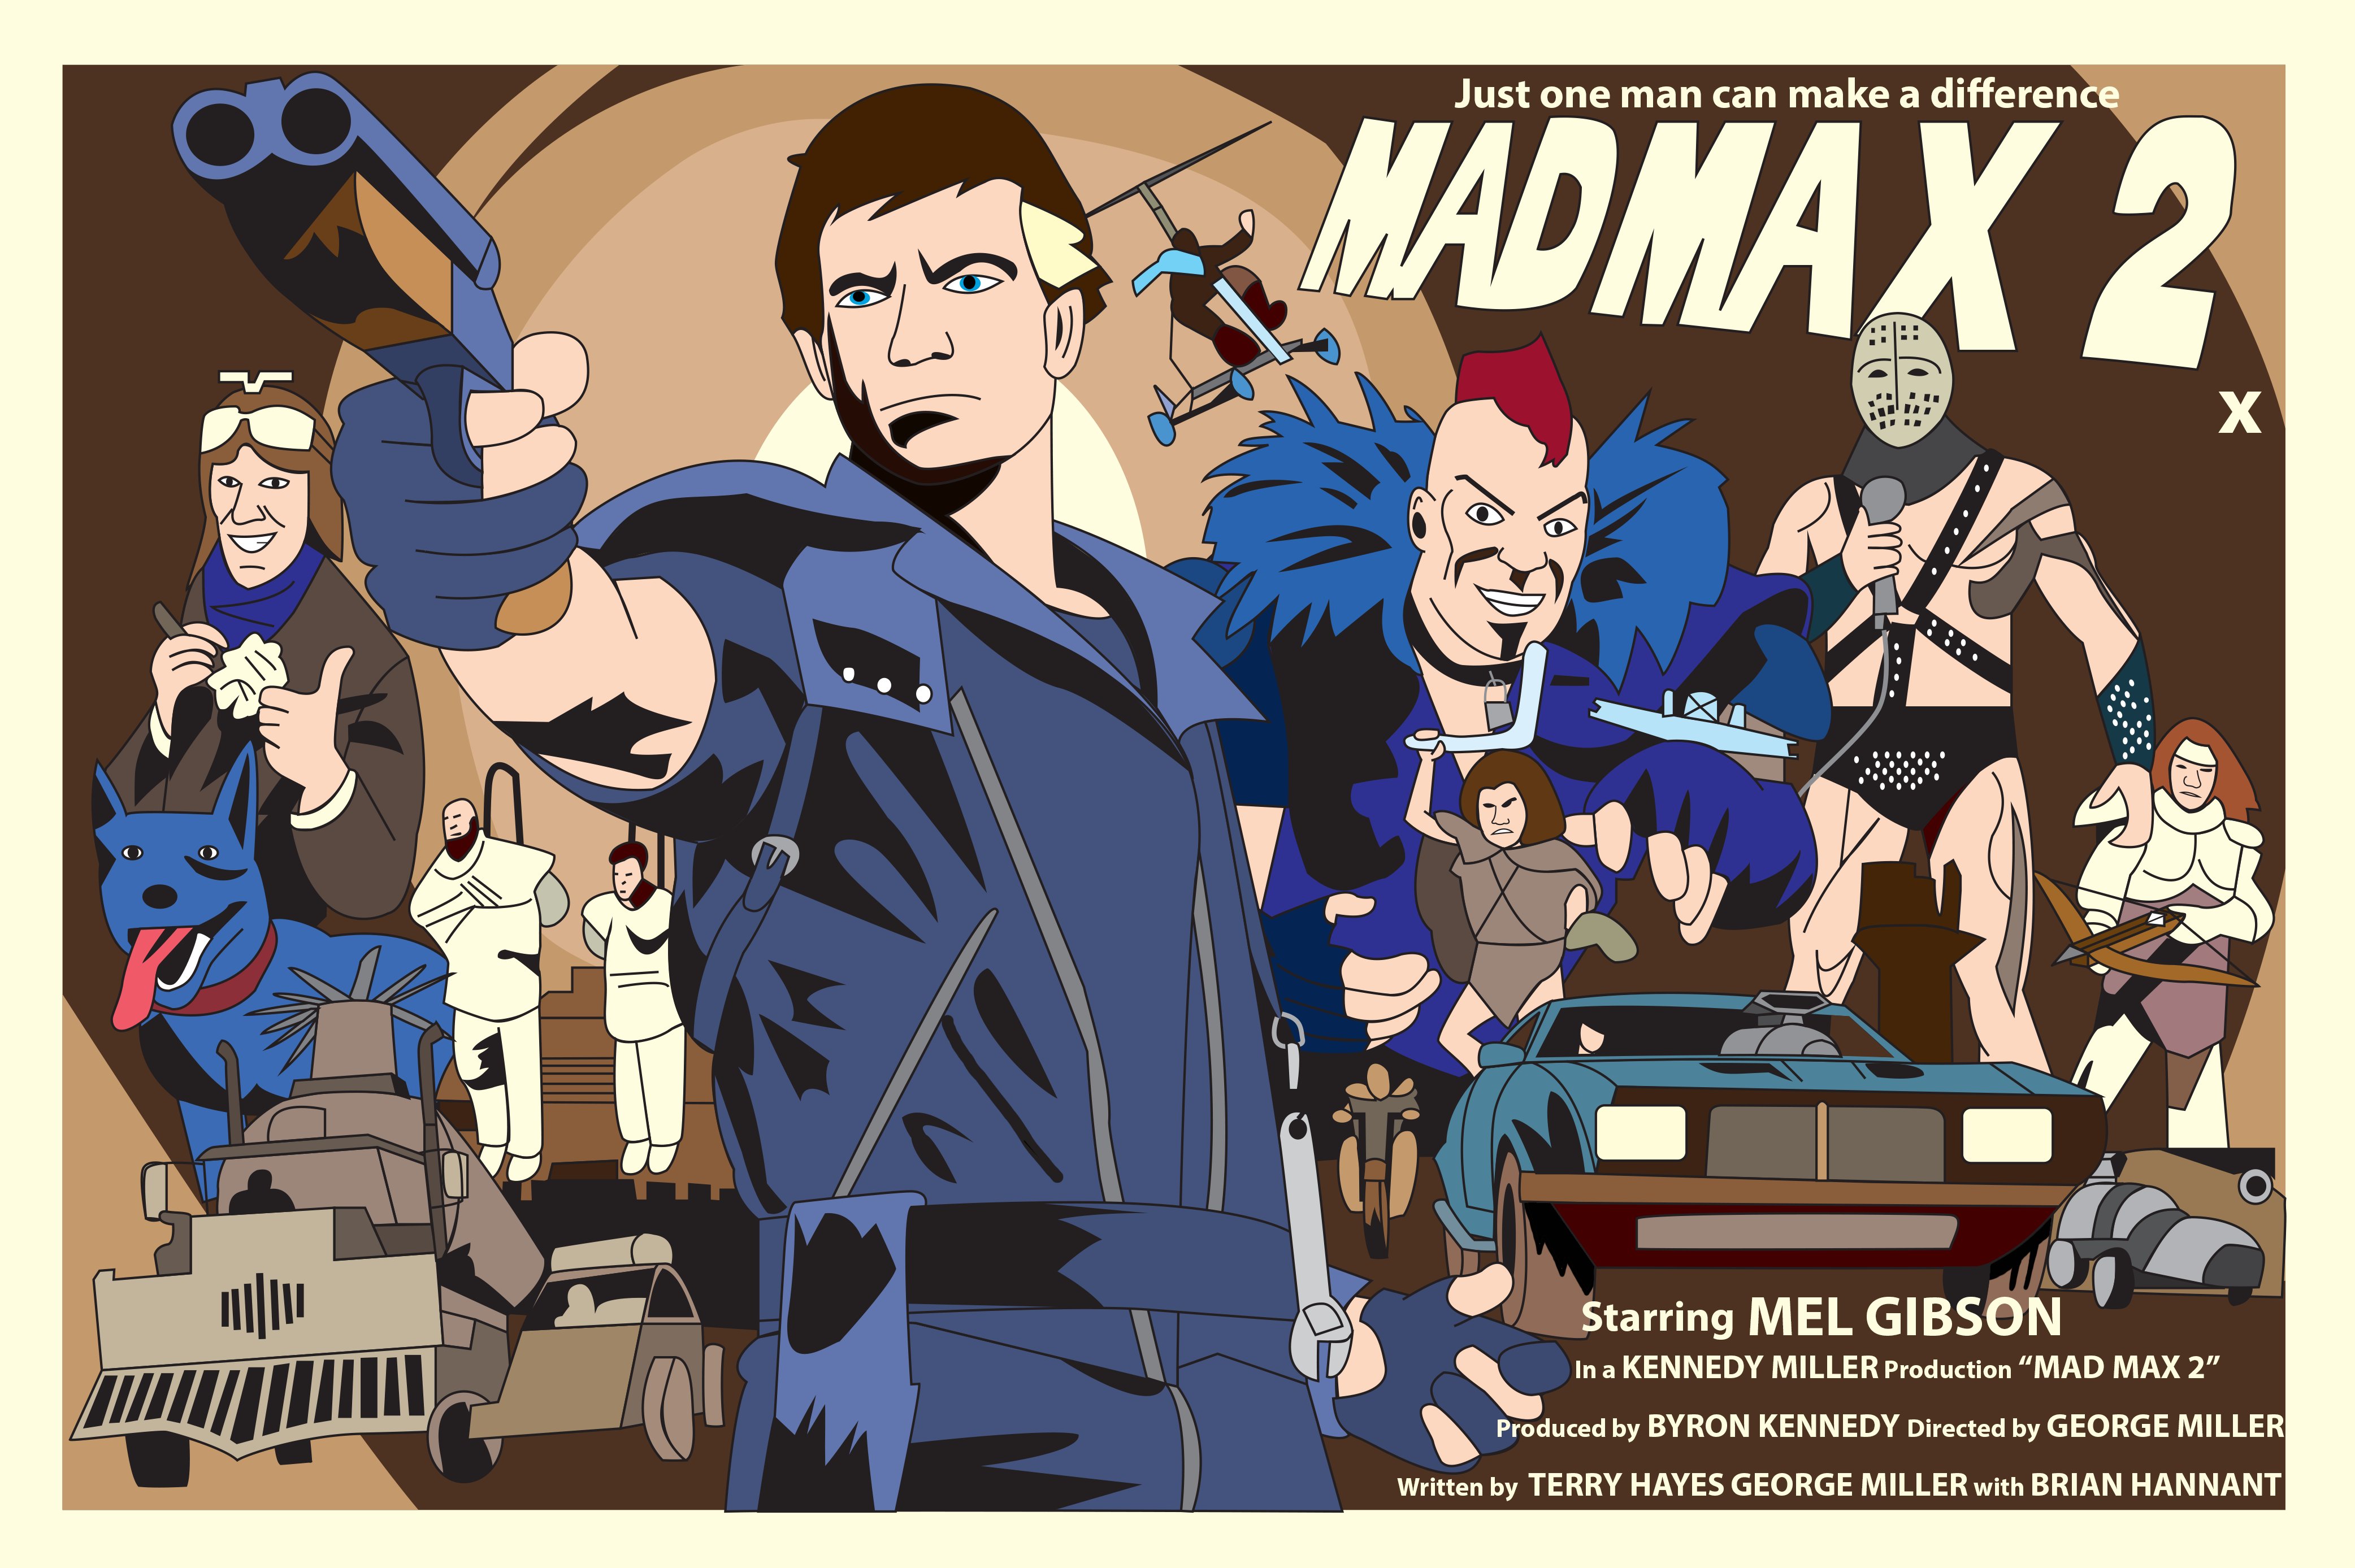 1mad max, Action, Adventure, Apocalyptic, Fighting, Fury, Futuristic, Mad, Max, Road, Sci fi, Warrior Wallpaper